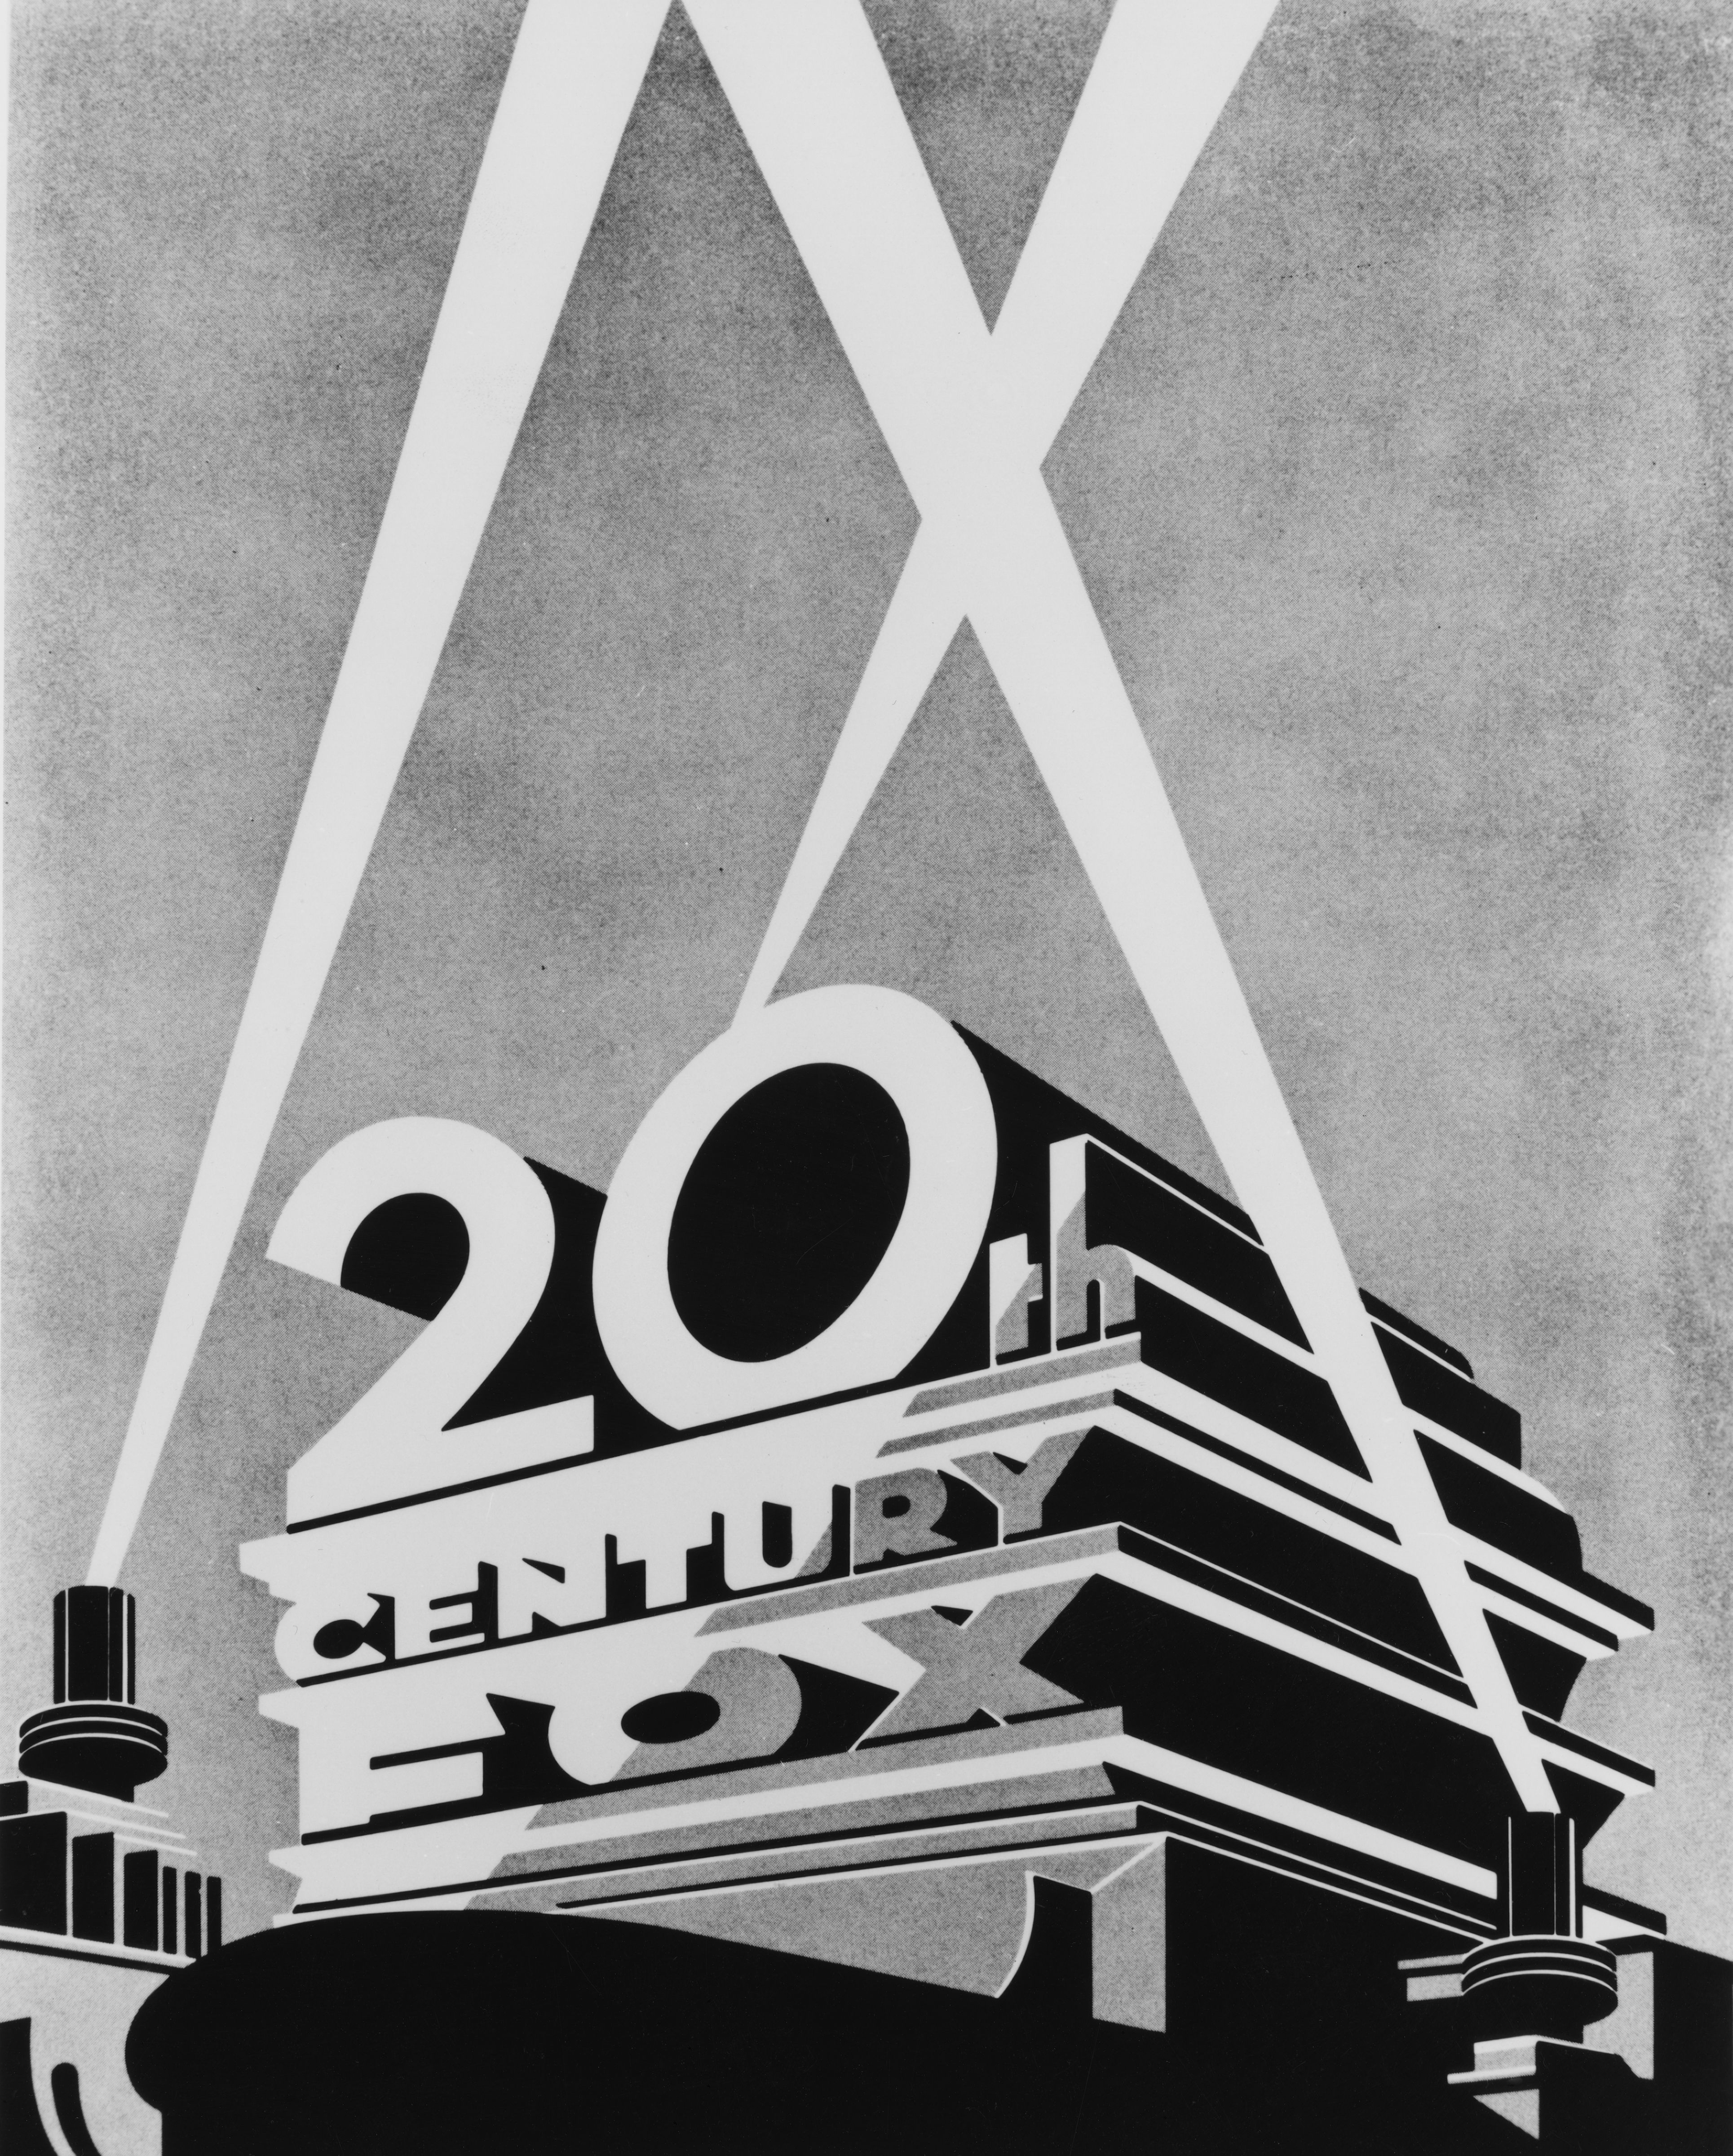 20 th fox. 20 Век Центури Фокс. 20 Век Фокс логотип. 20 Сентури Фокс логотип. Студия 20th Century Fox.